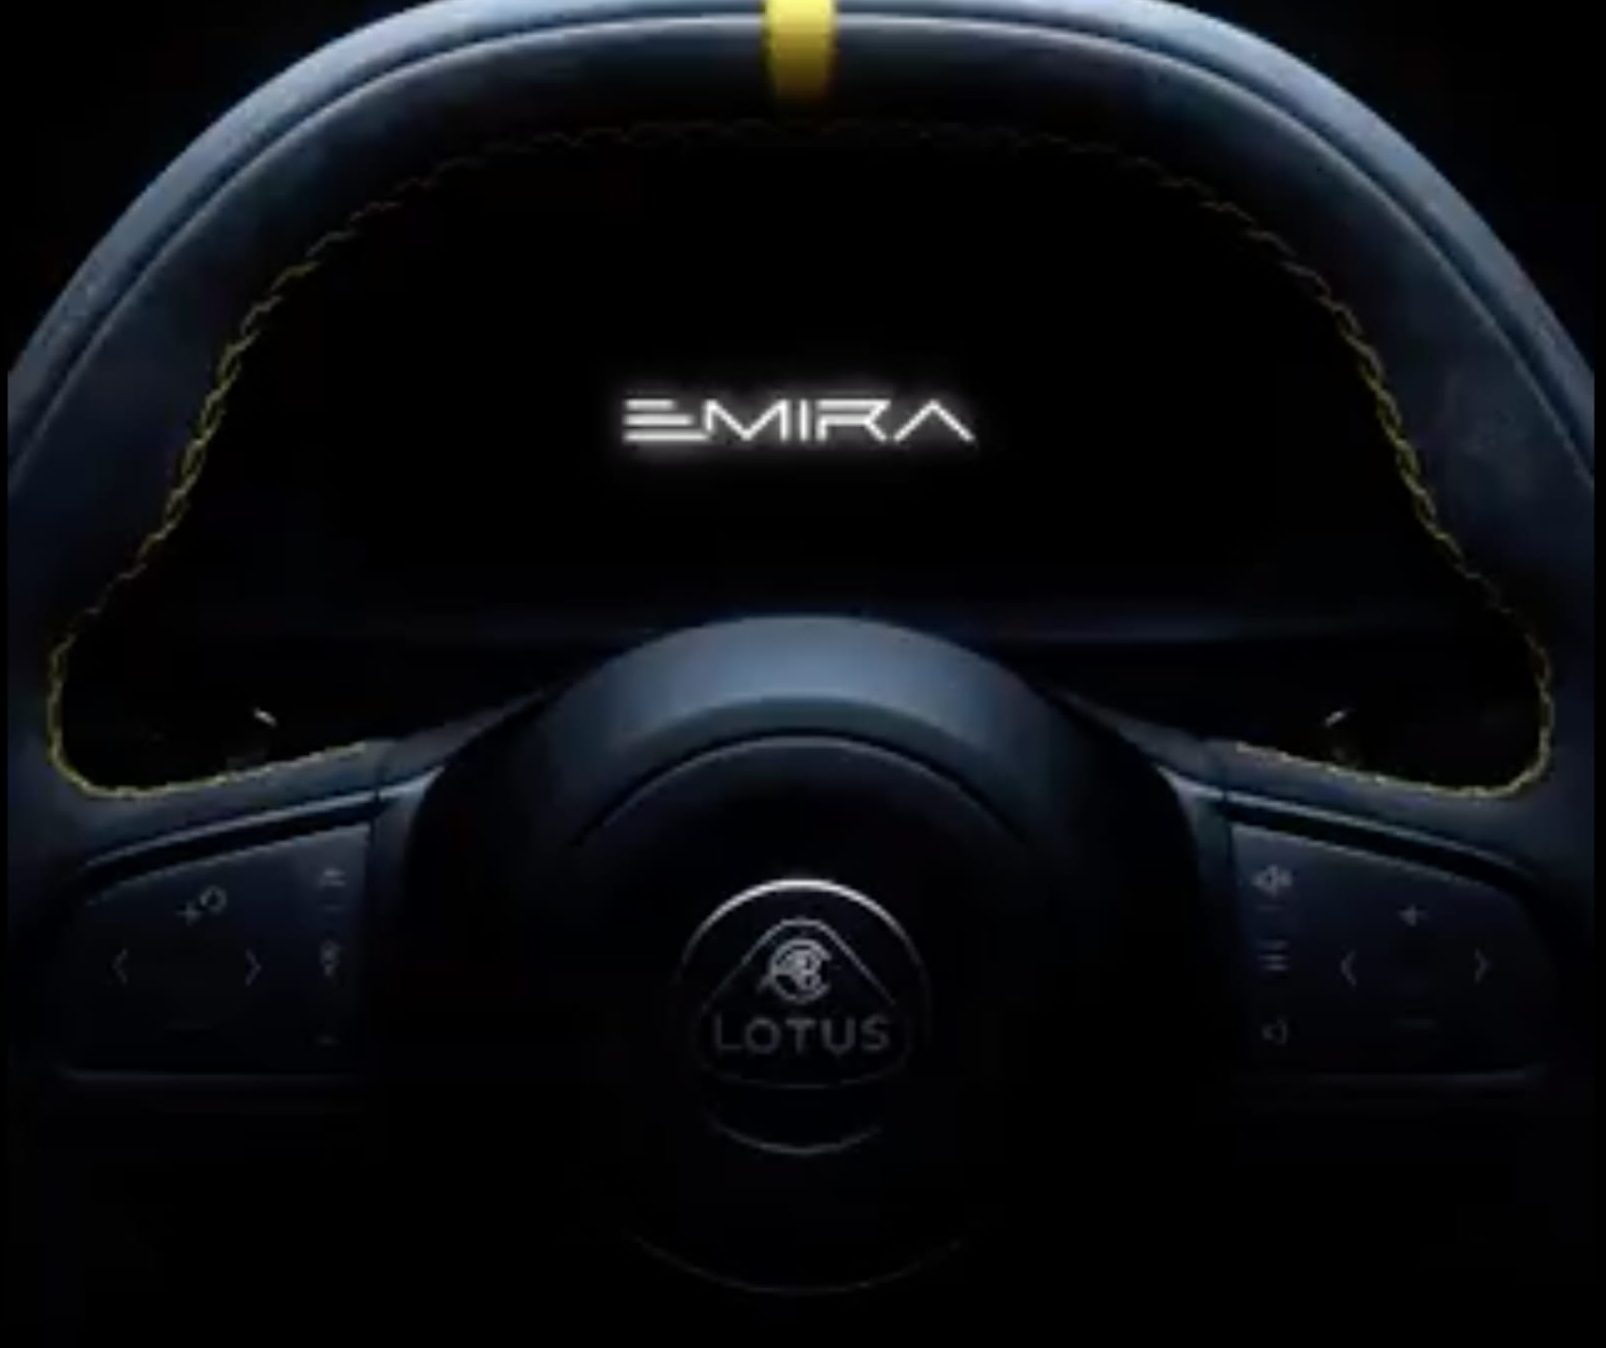 Lotus Emira steering wheel e1623186089571